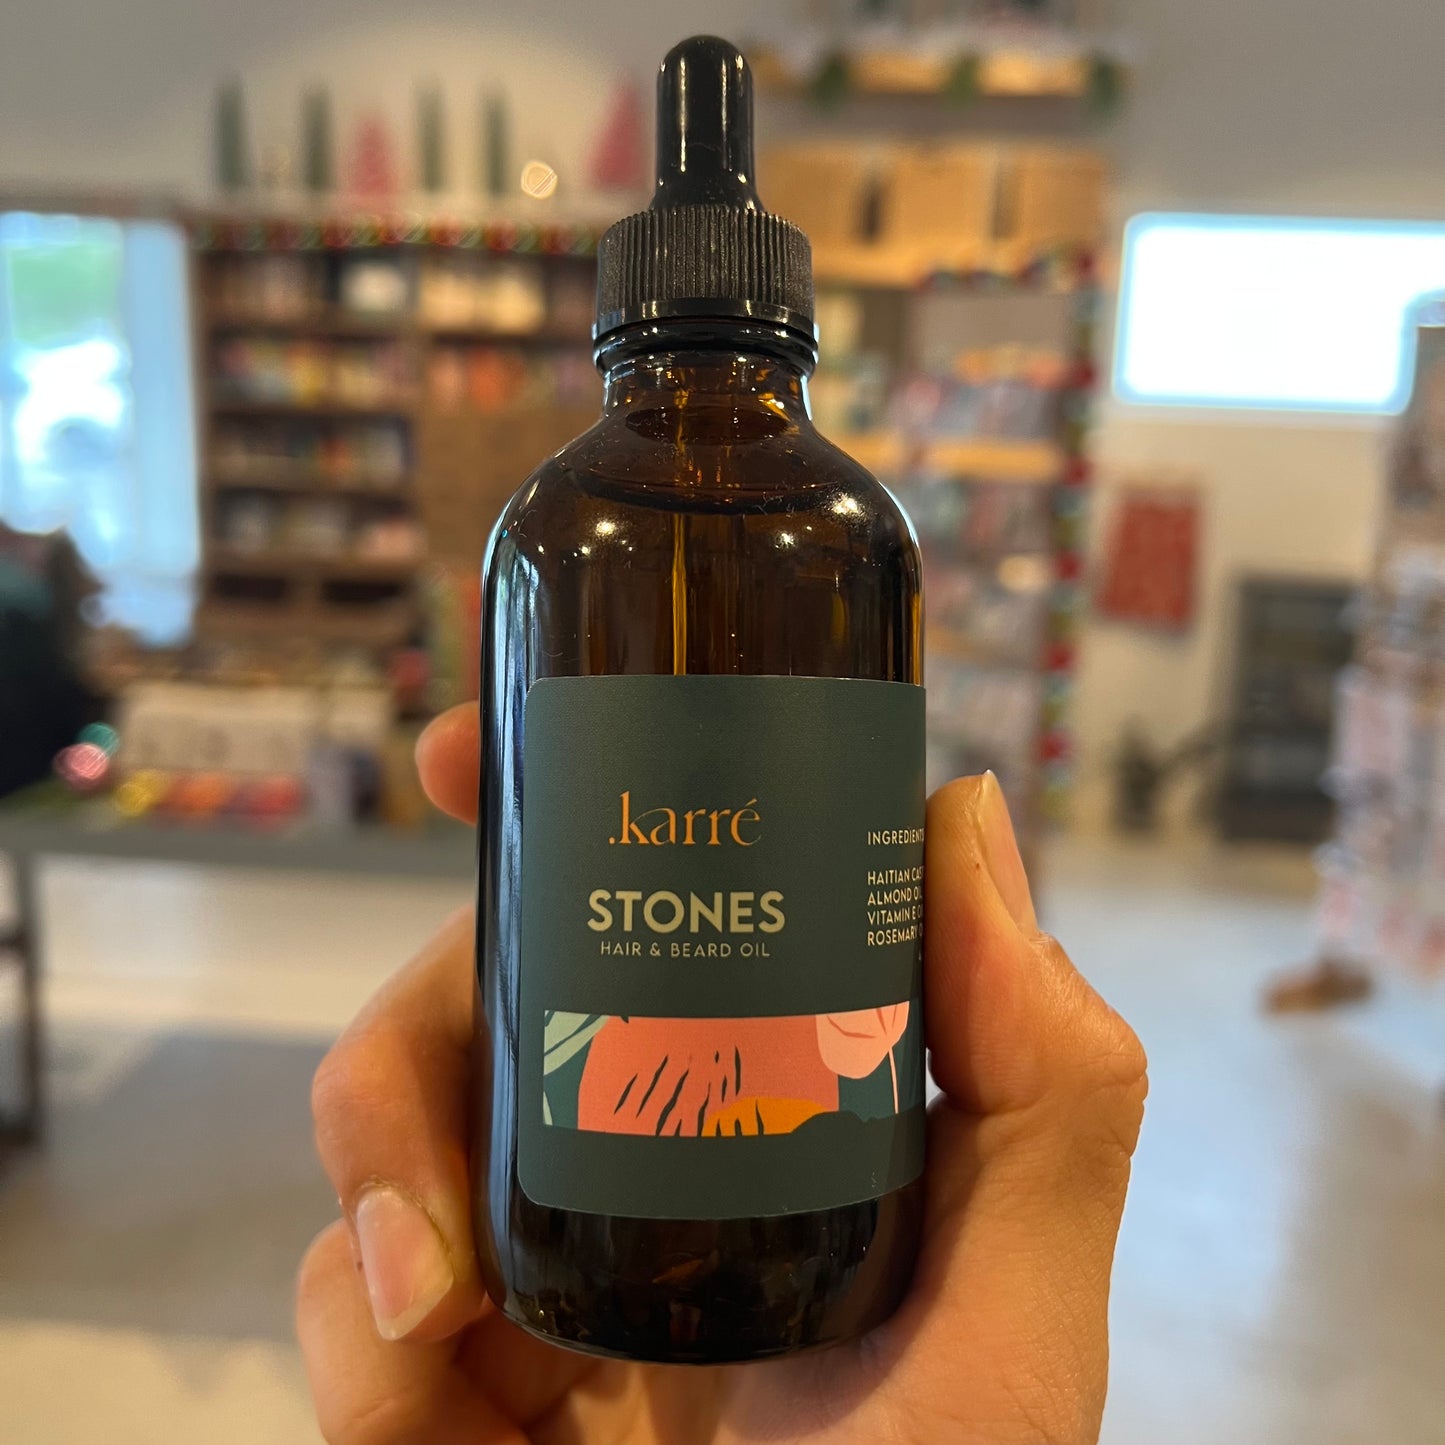 Karre Stones Hair & Beard Oil